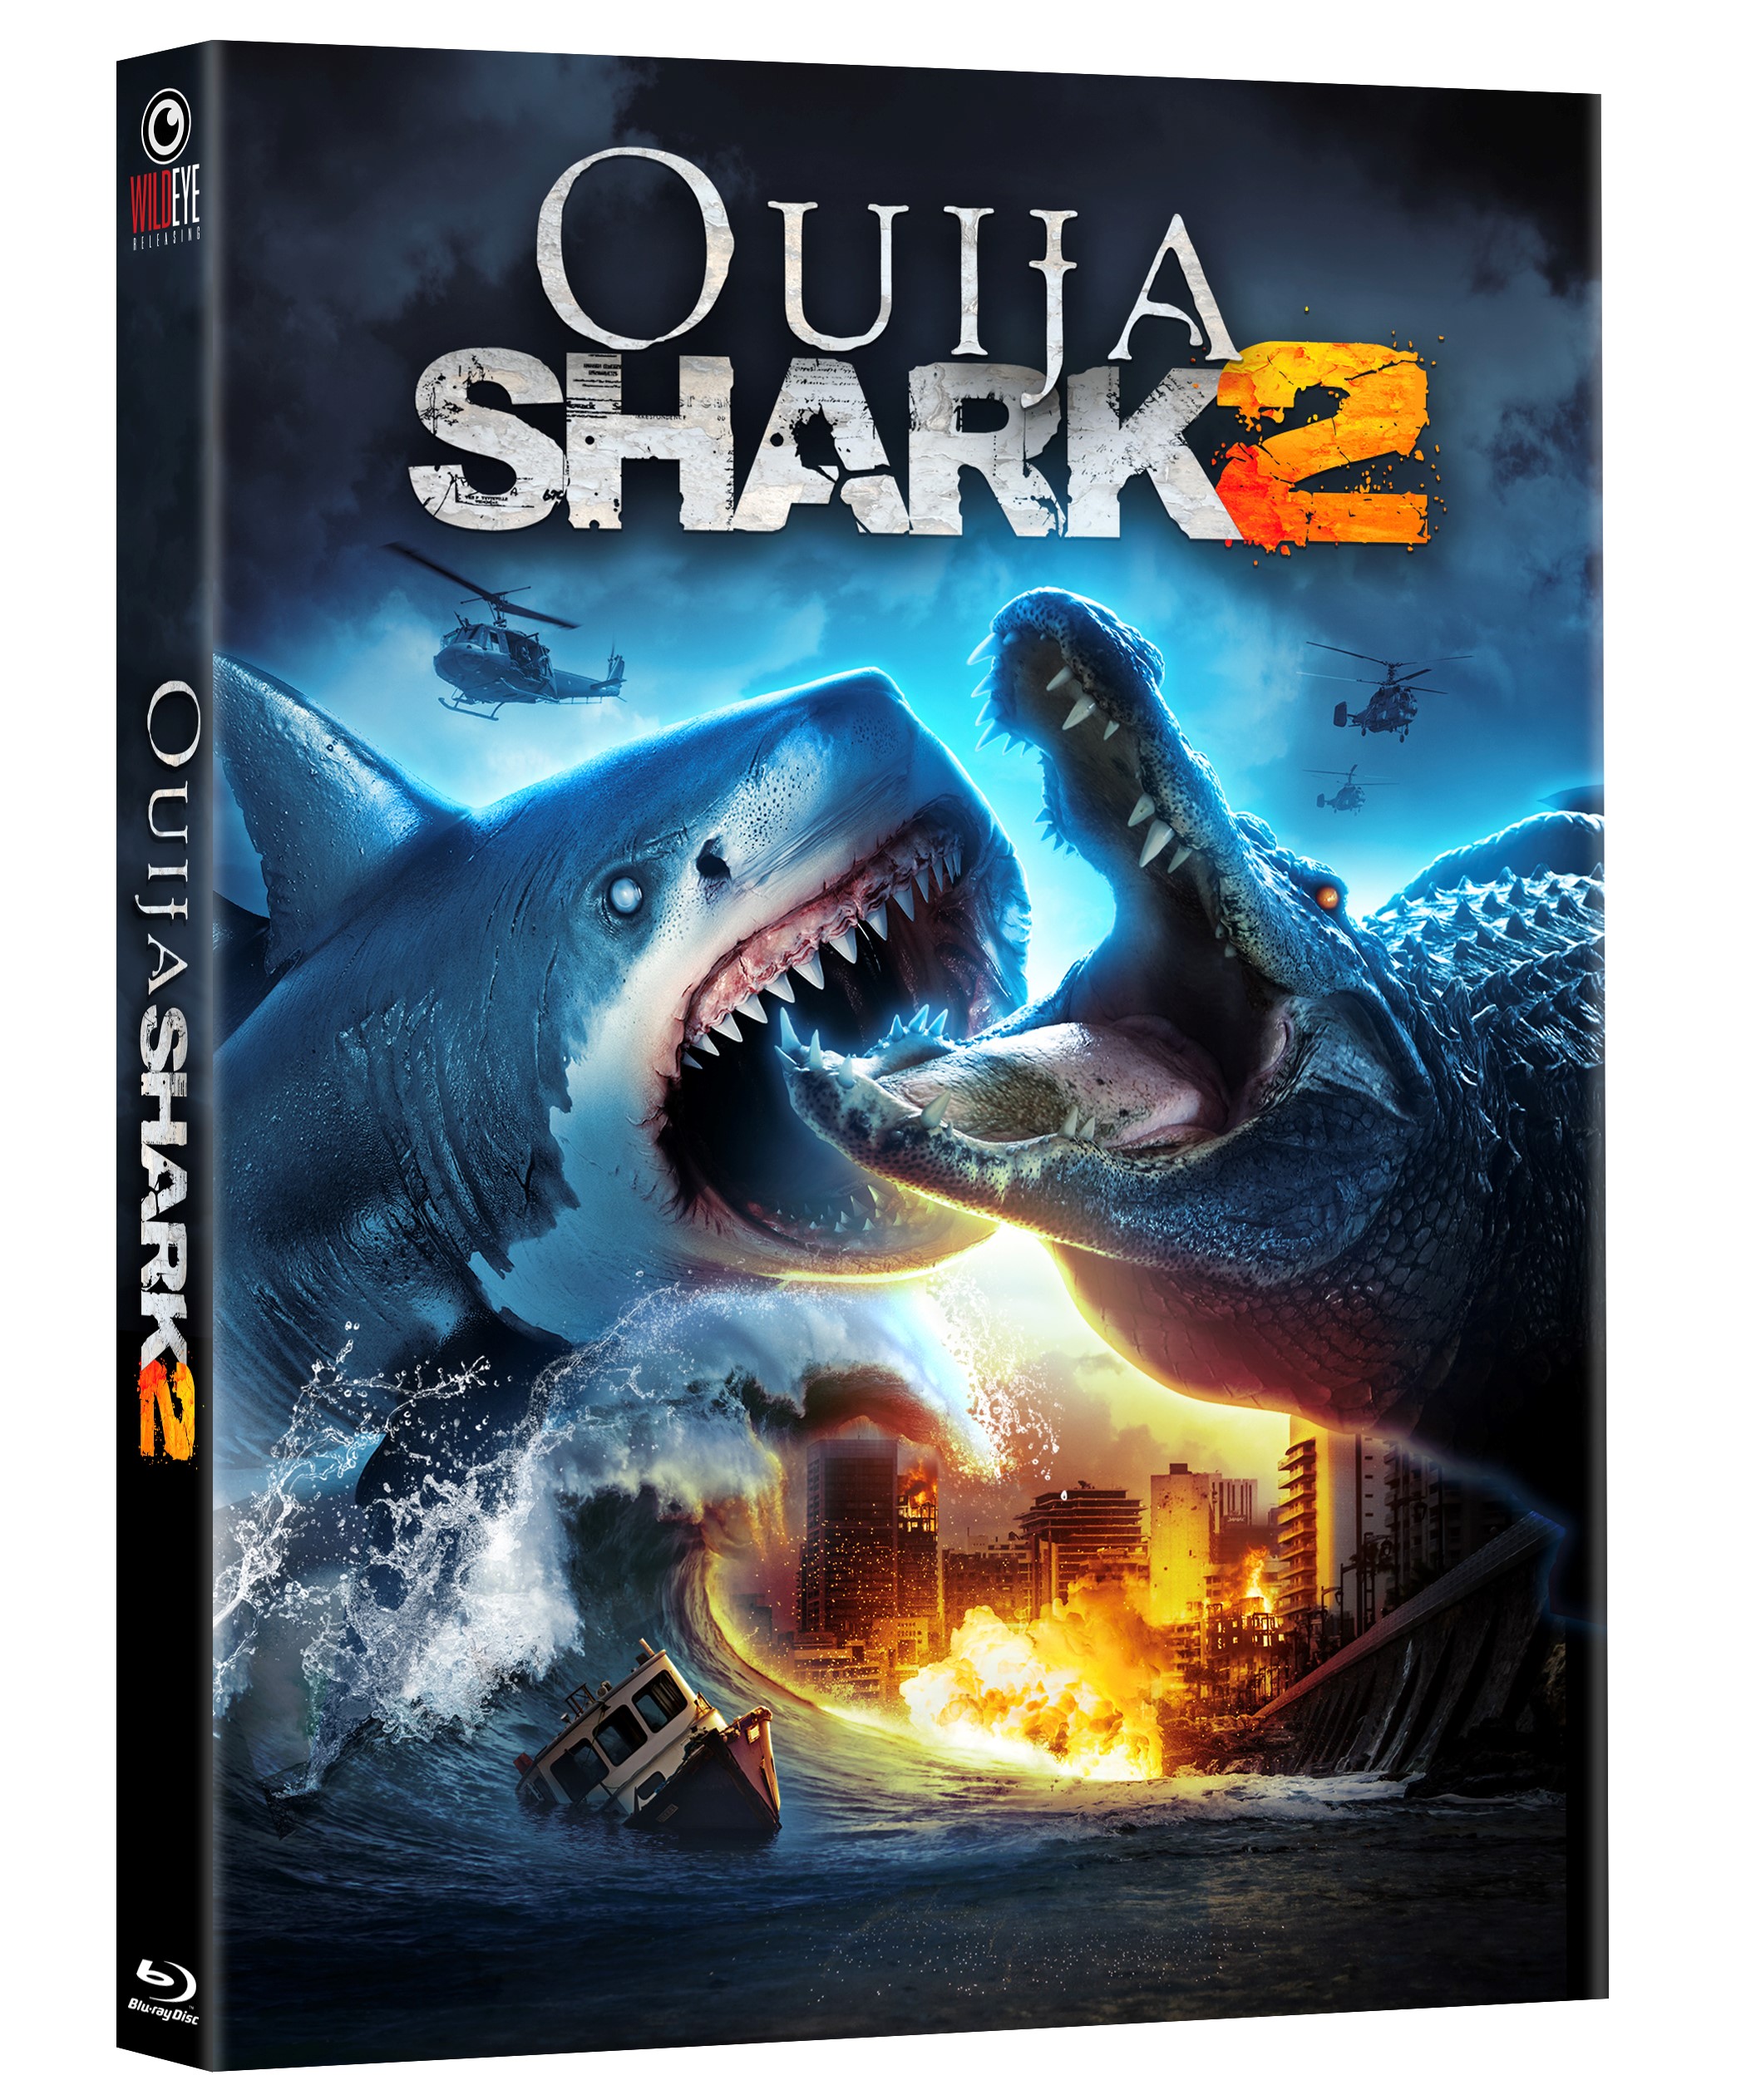 Release Announcement: OUIJA SHARK 2